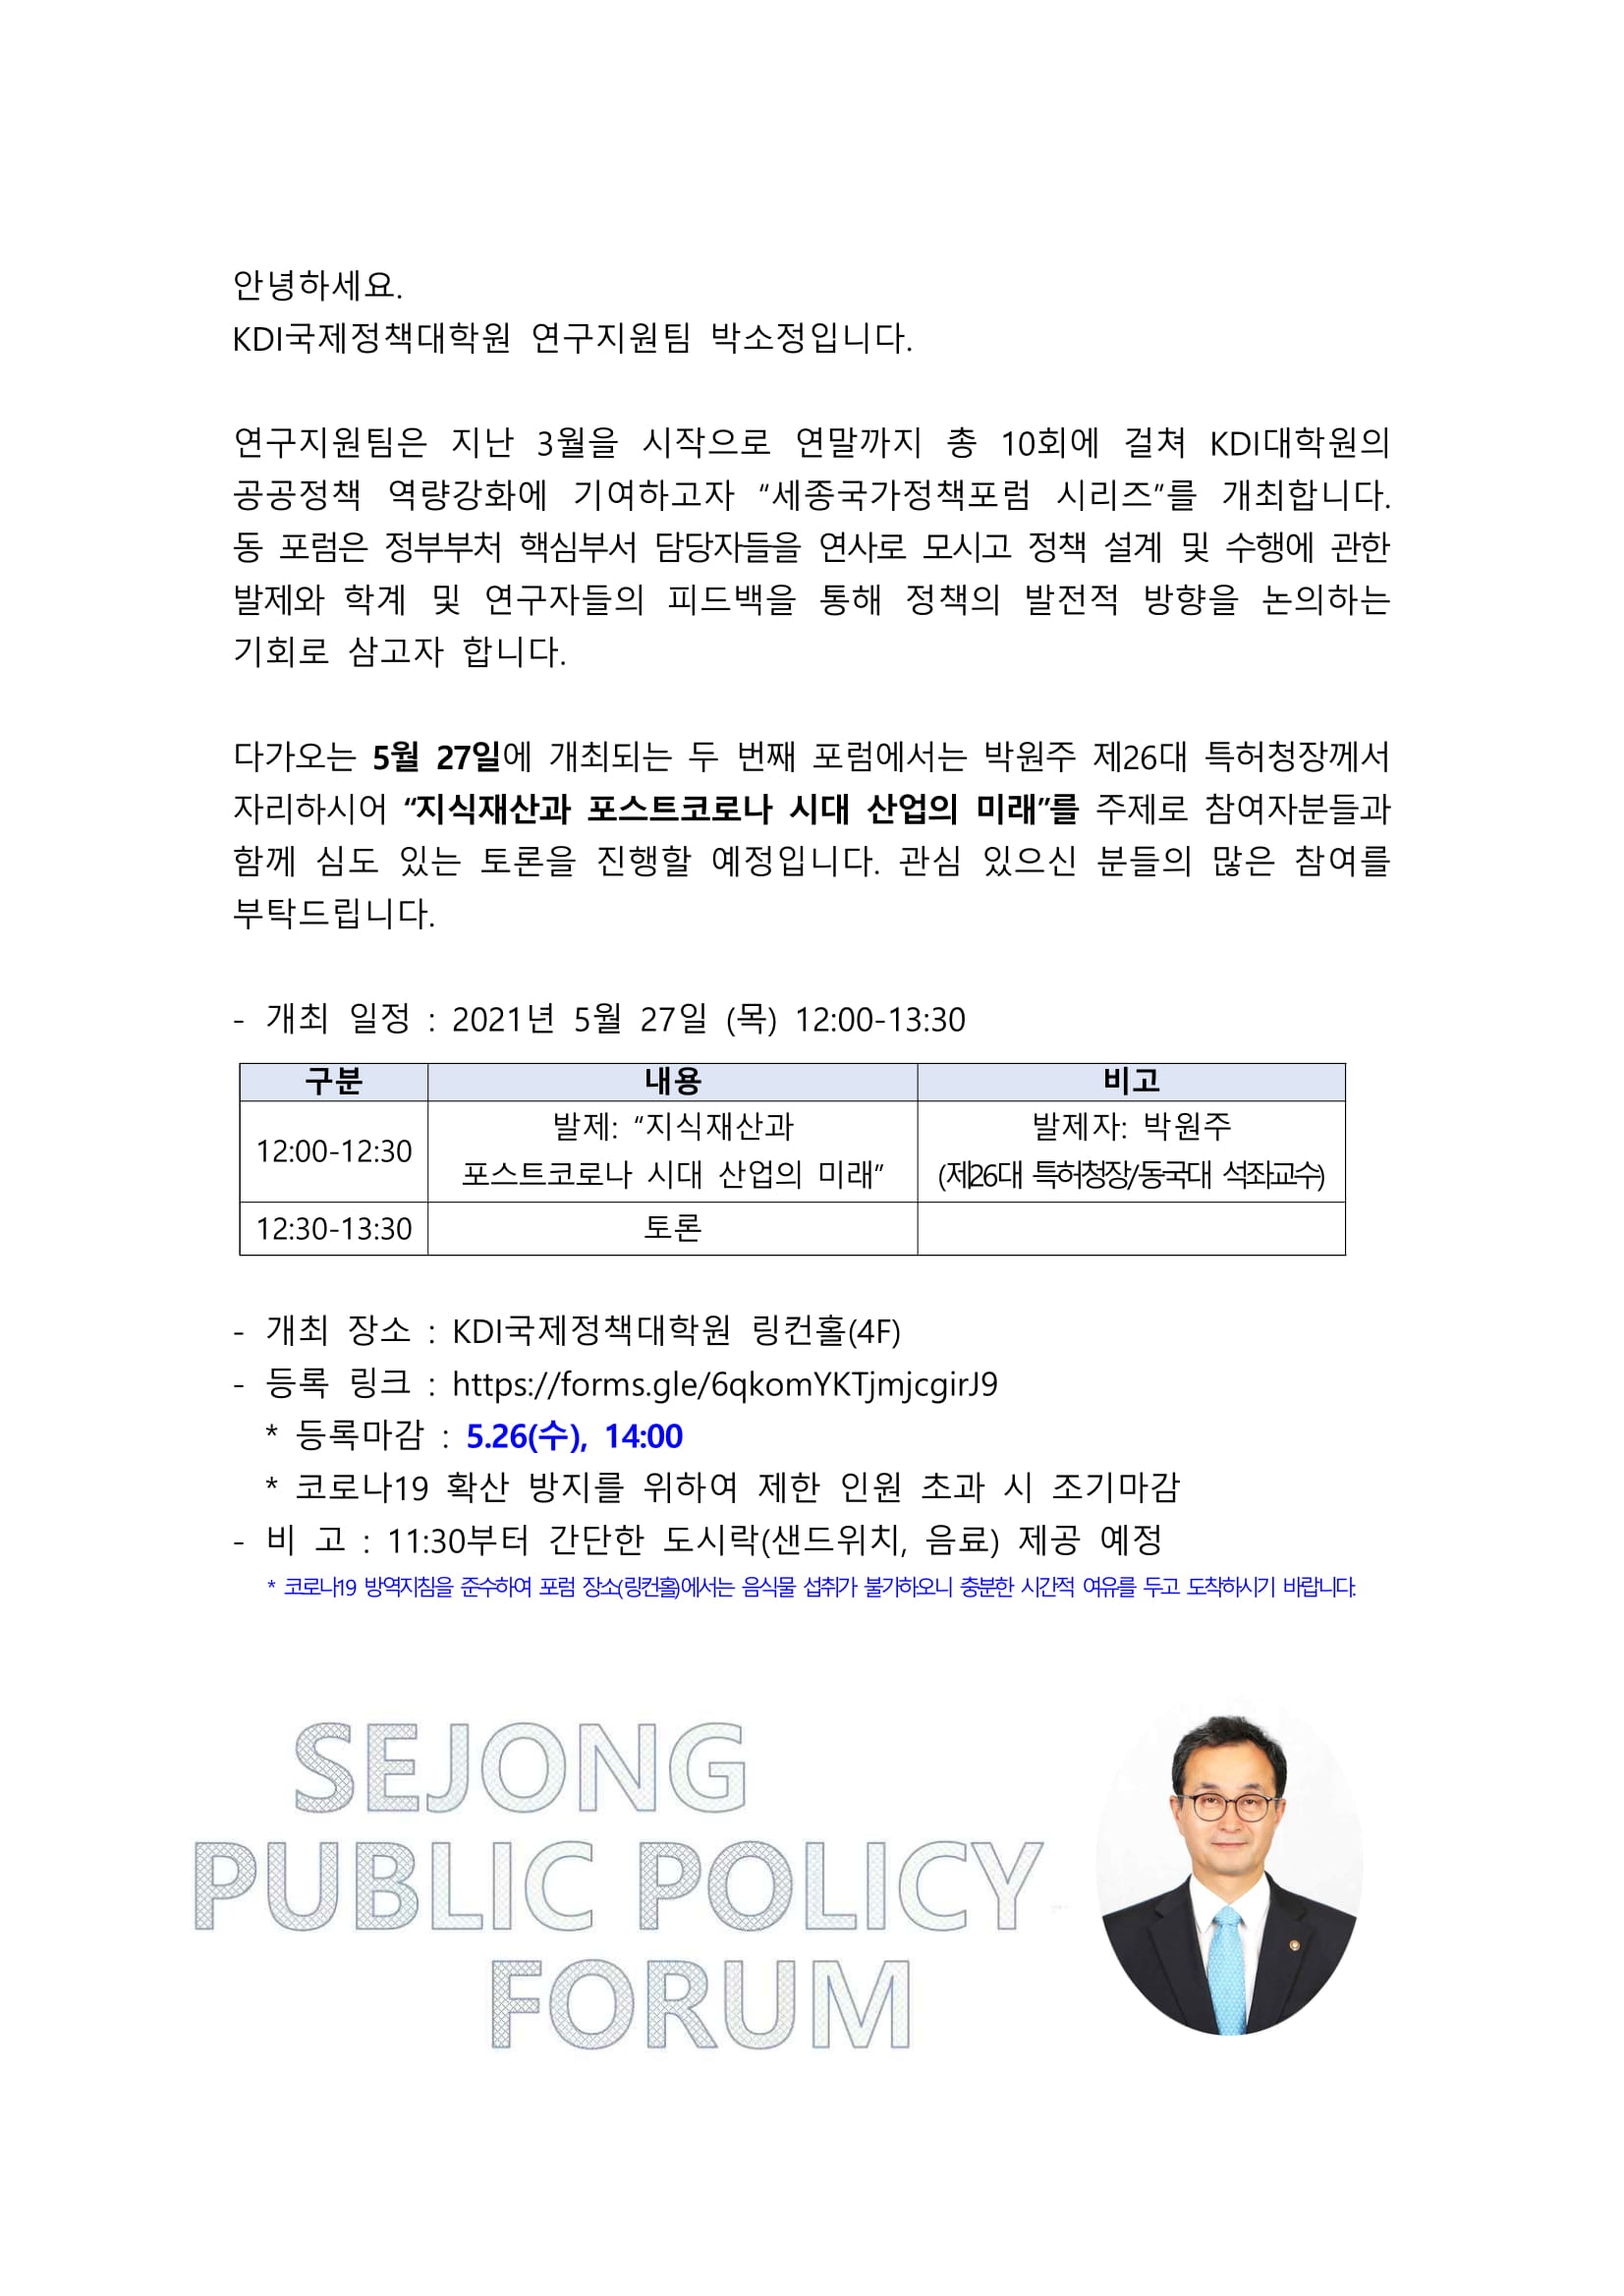 [Invitation] 제2회 세종국가정책포럼 개최 안내 (5월 27일(목) 오후12시)